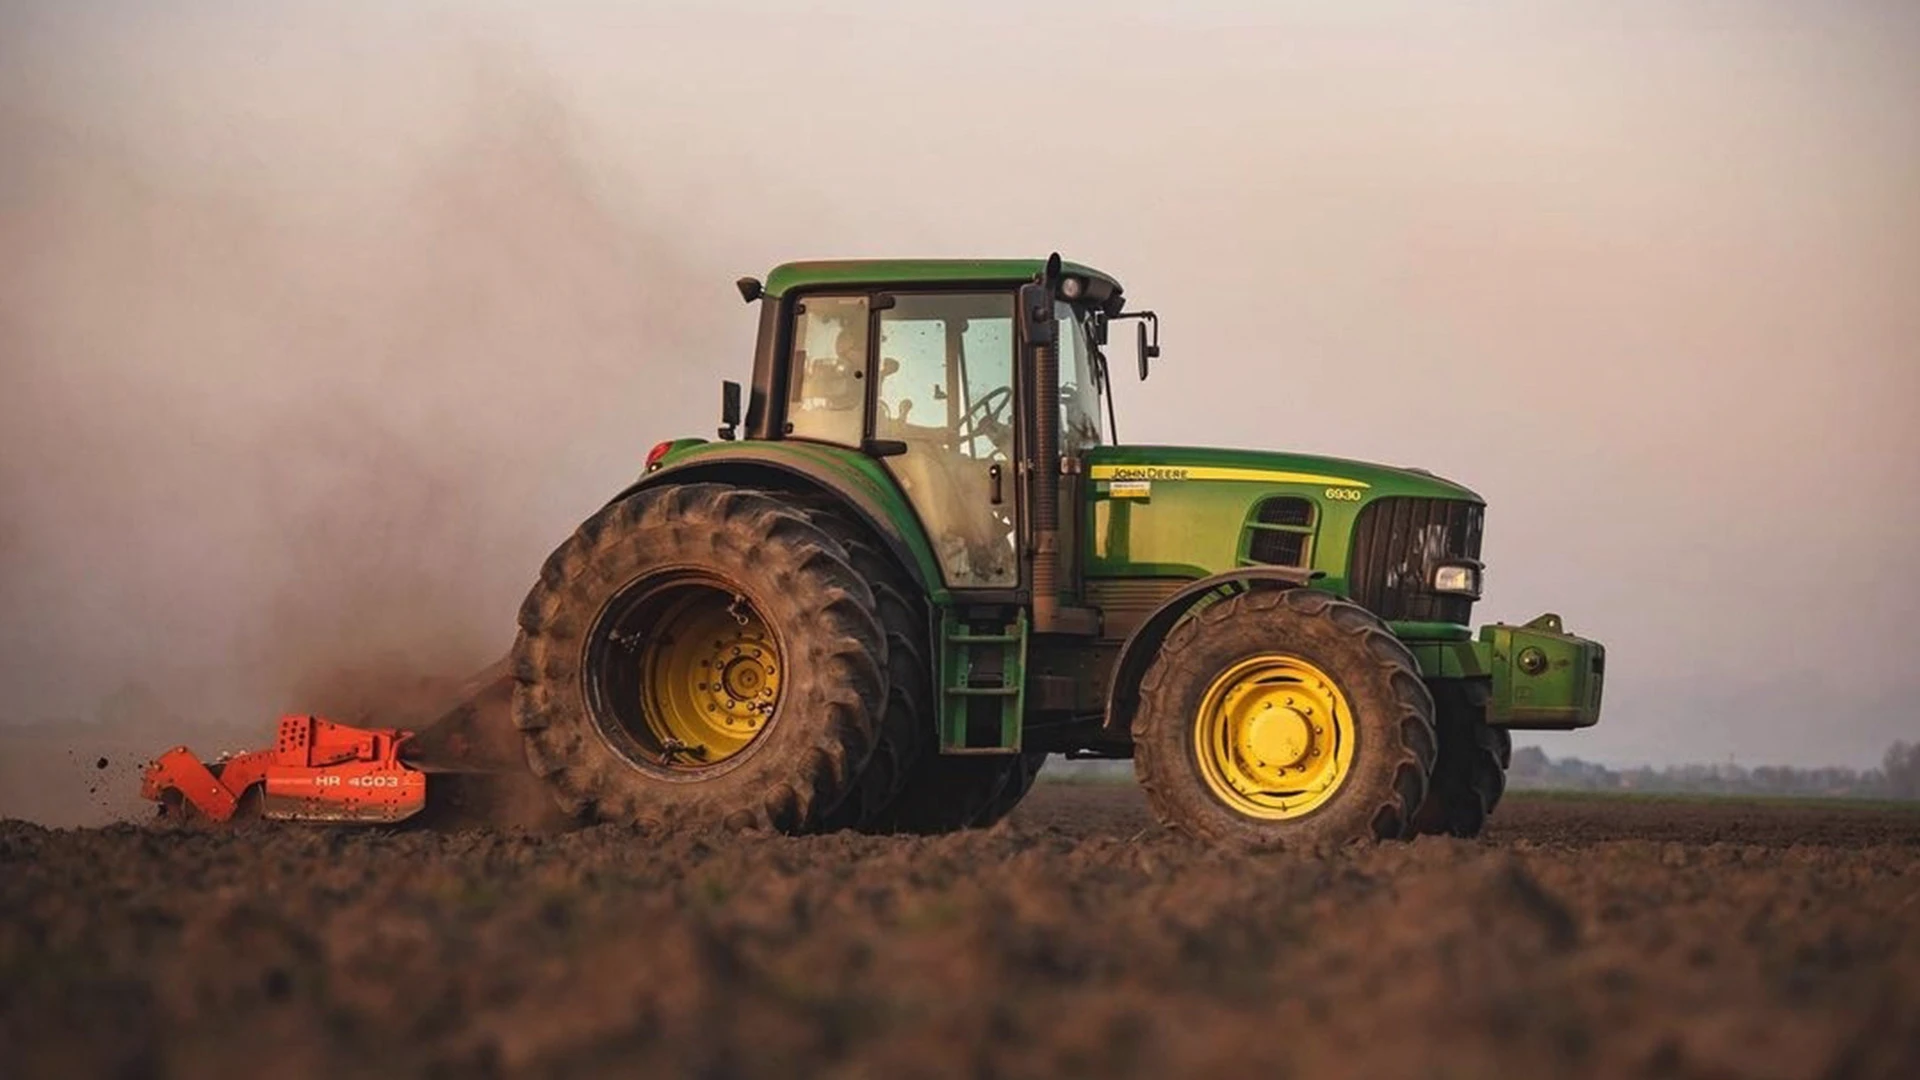 Green John Deere tractor ploughing a field